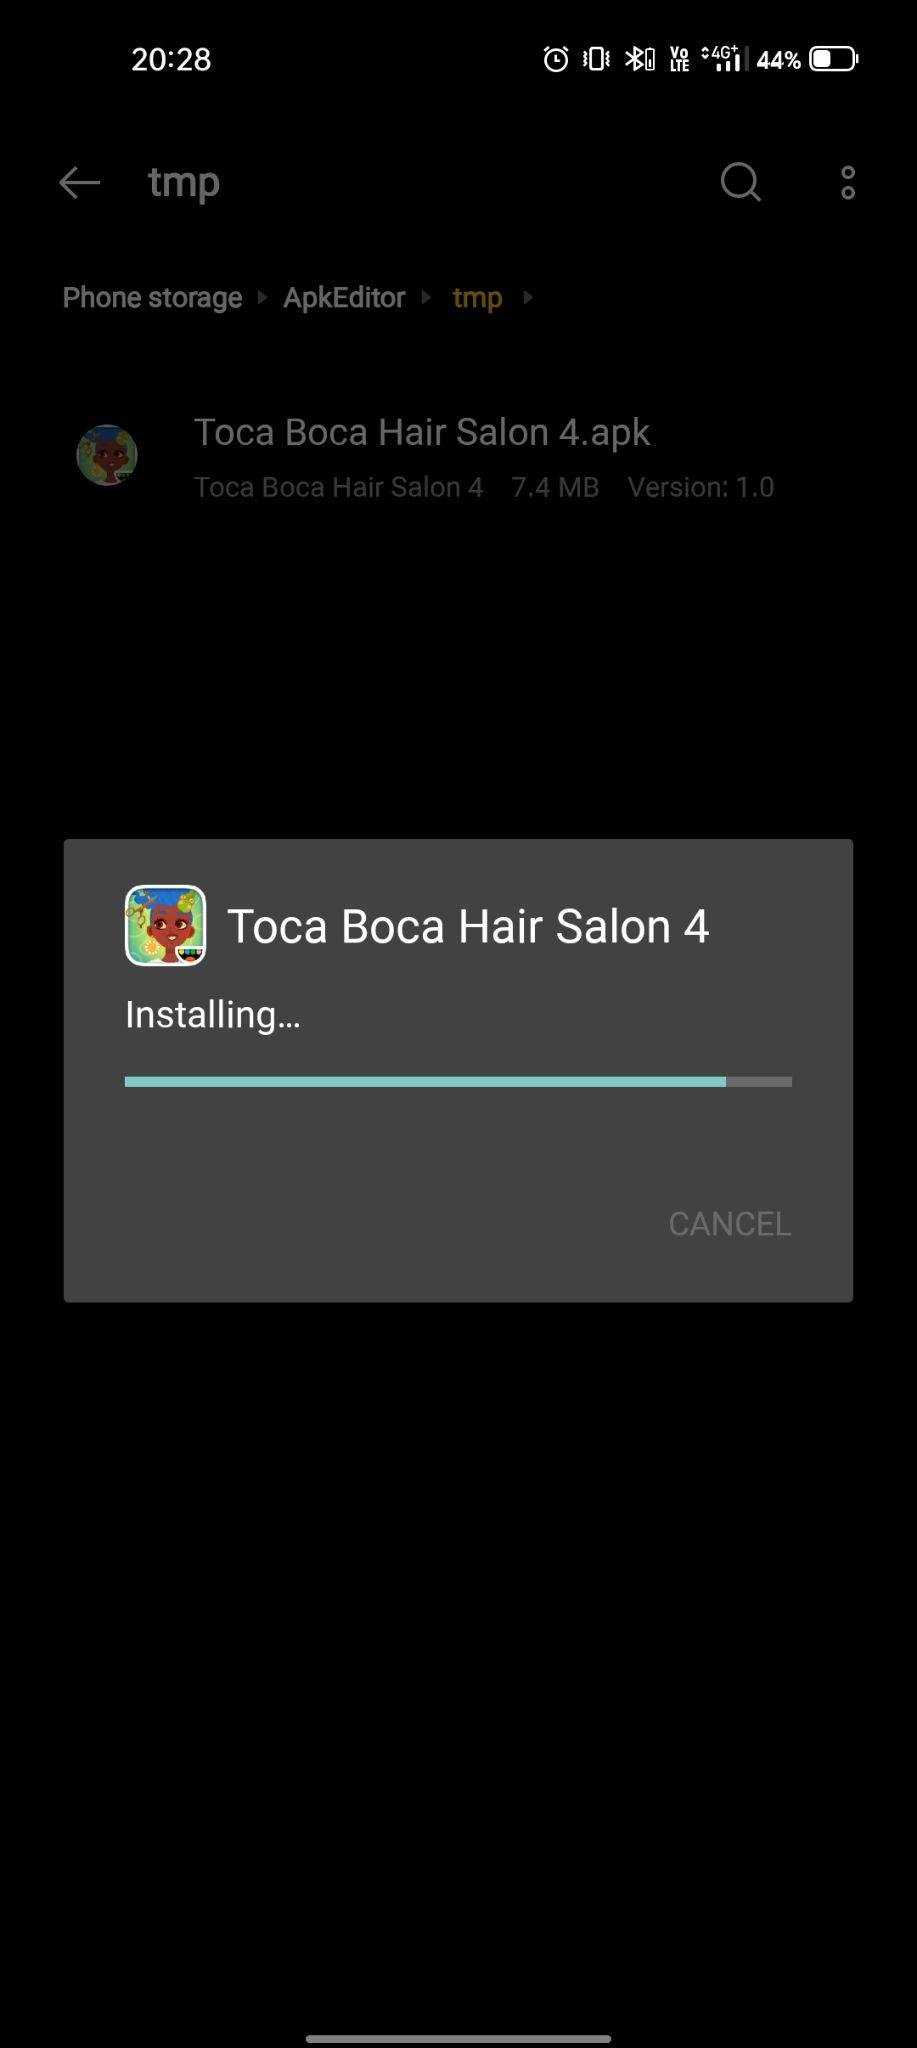 Toca Hair Salon 4 apk installing